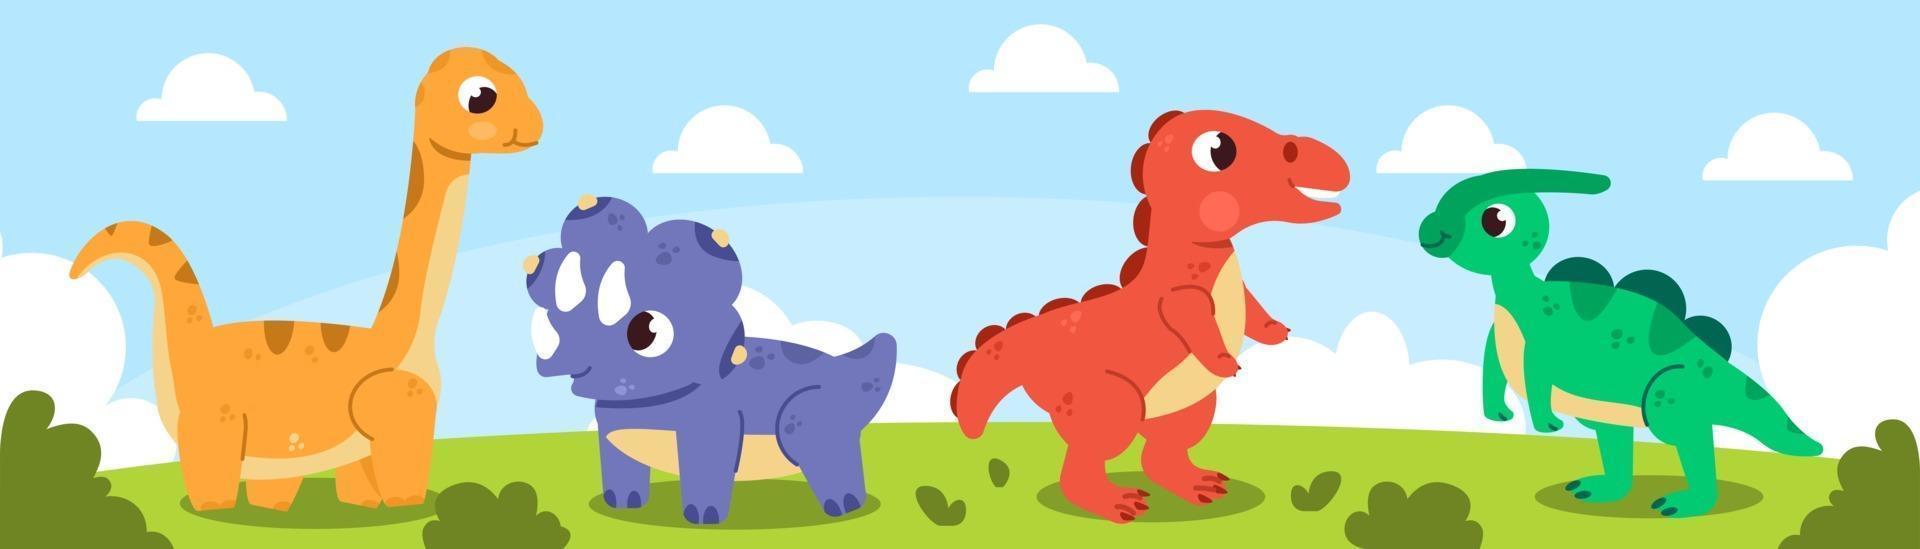 niedliches Baby-Dinosaurier-Illustrationsset vektor